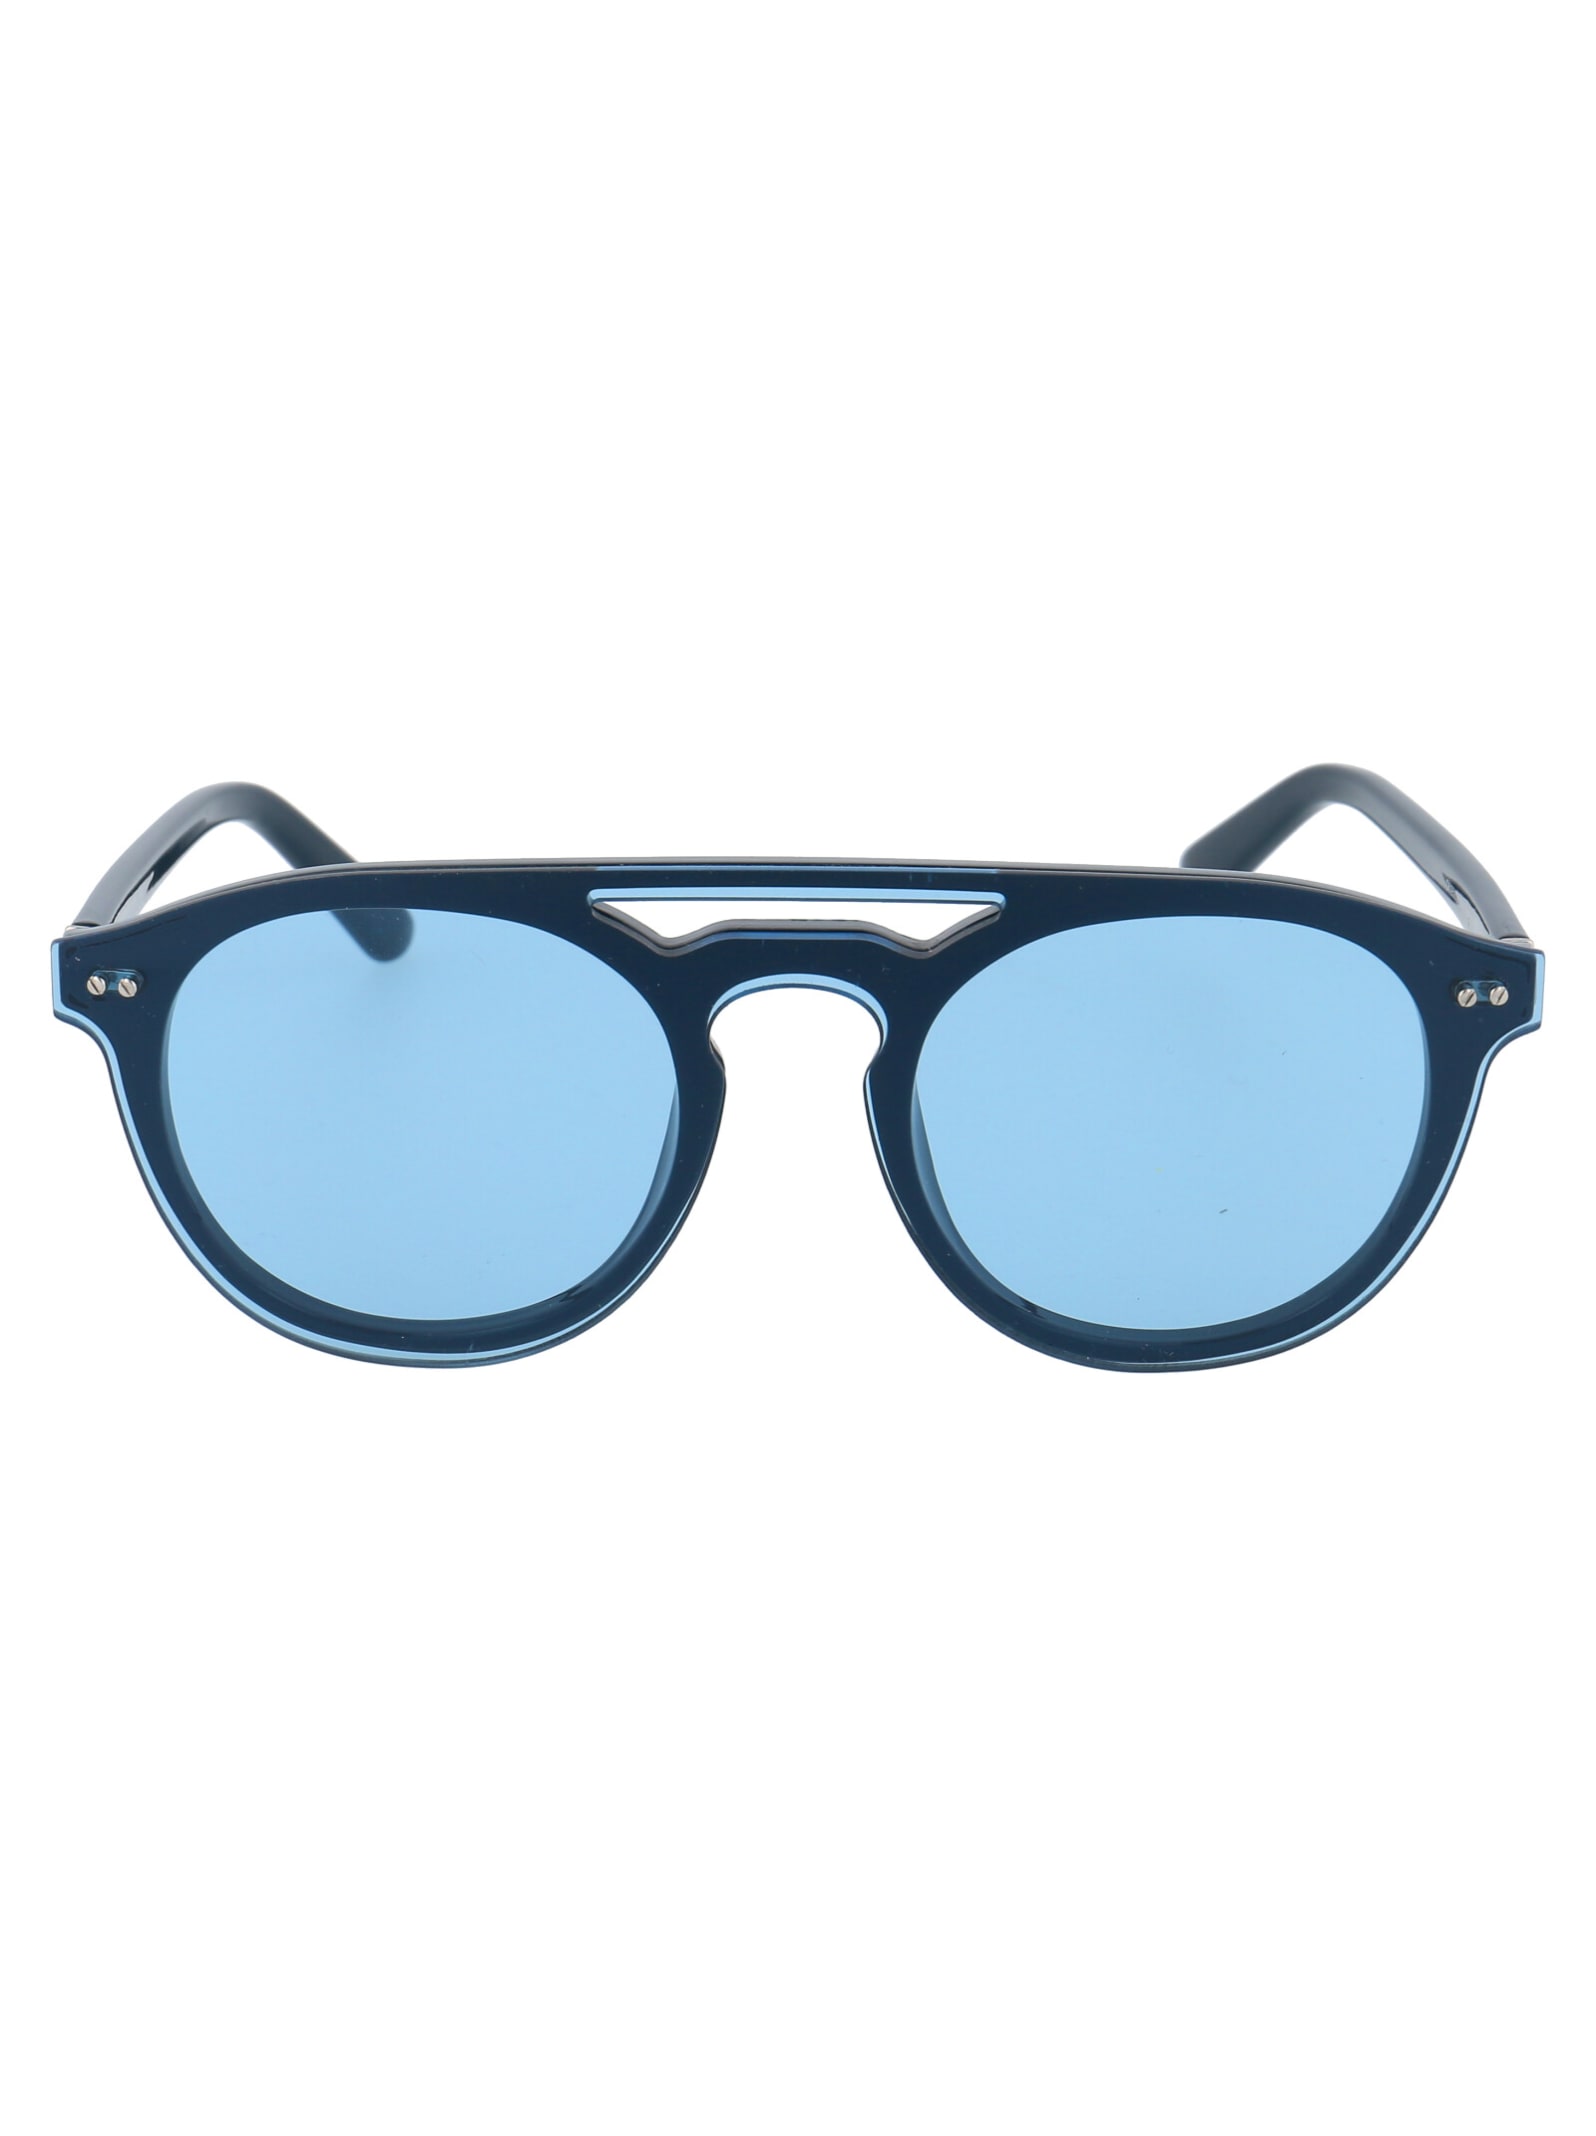 Calvin Klein Ck19500s Sunglasses